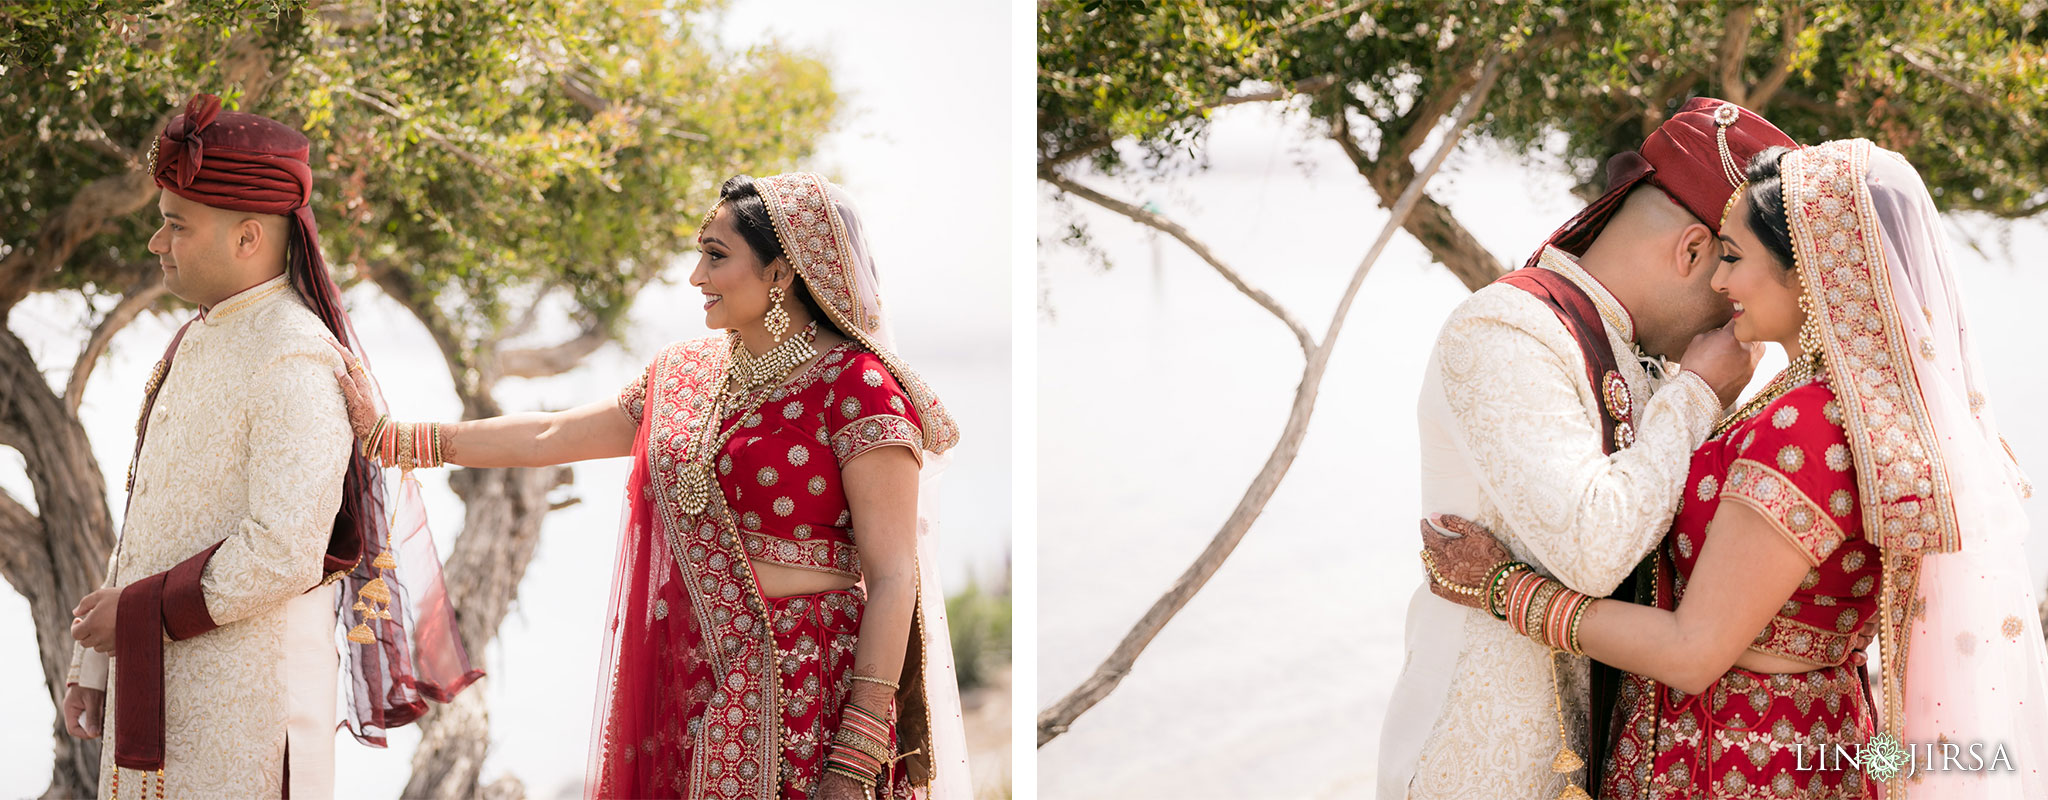 13 loews coronado bay resort indian first look wedding photography